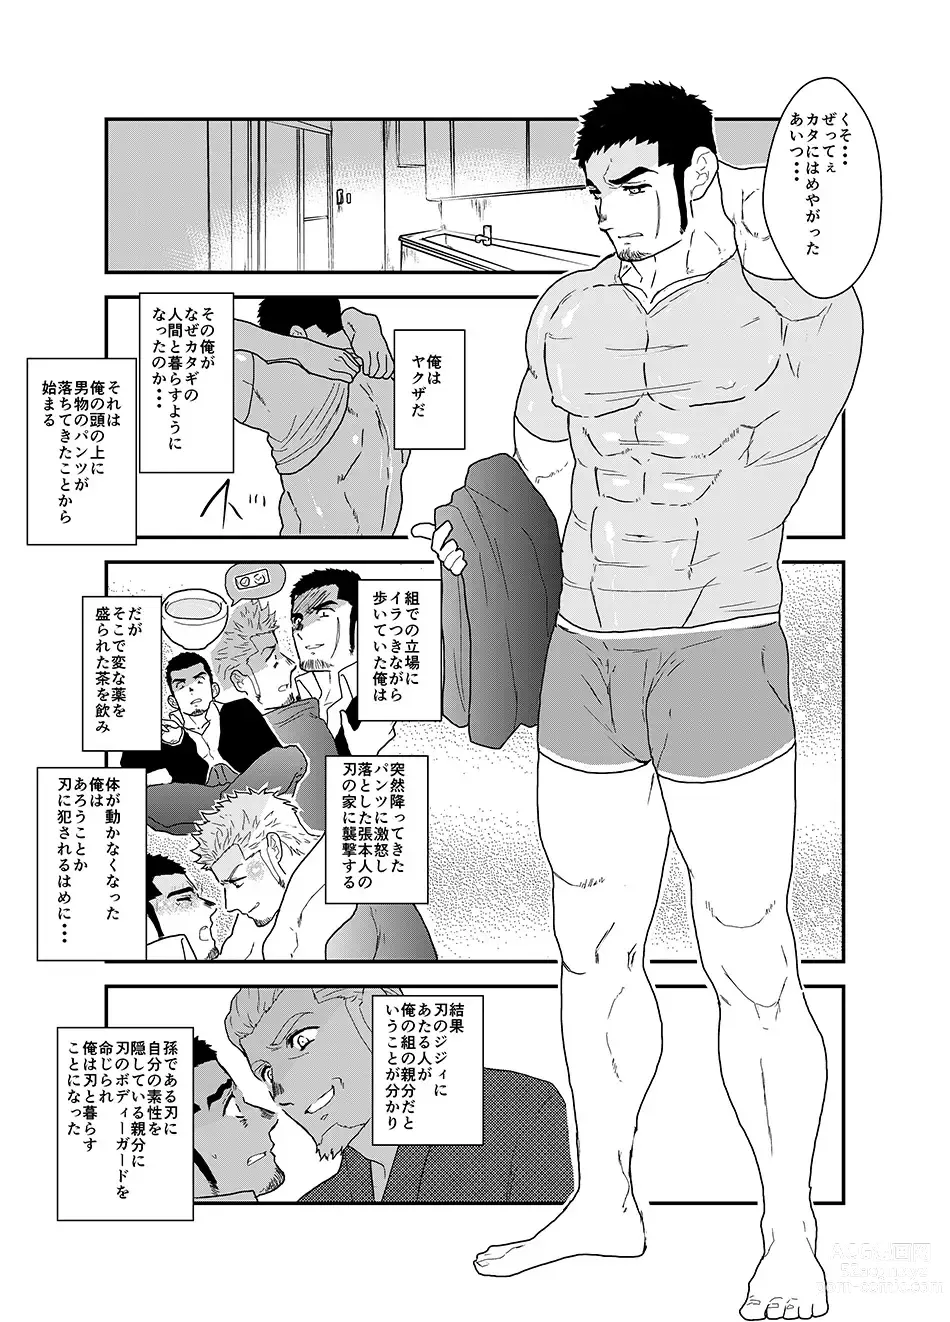 Page 6 of doujinshi Moshimo Yakuza ni Haitatsu Gyousha no Cosplay o Sasete Mitara. - IF YOU LET THE YAKUZA COSPLAY AS A DELIVERY COMPANY.